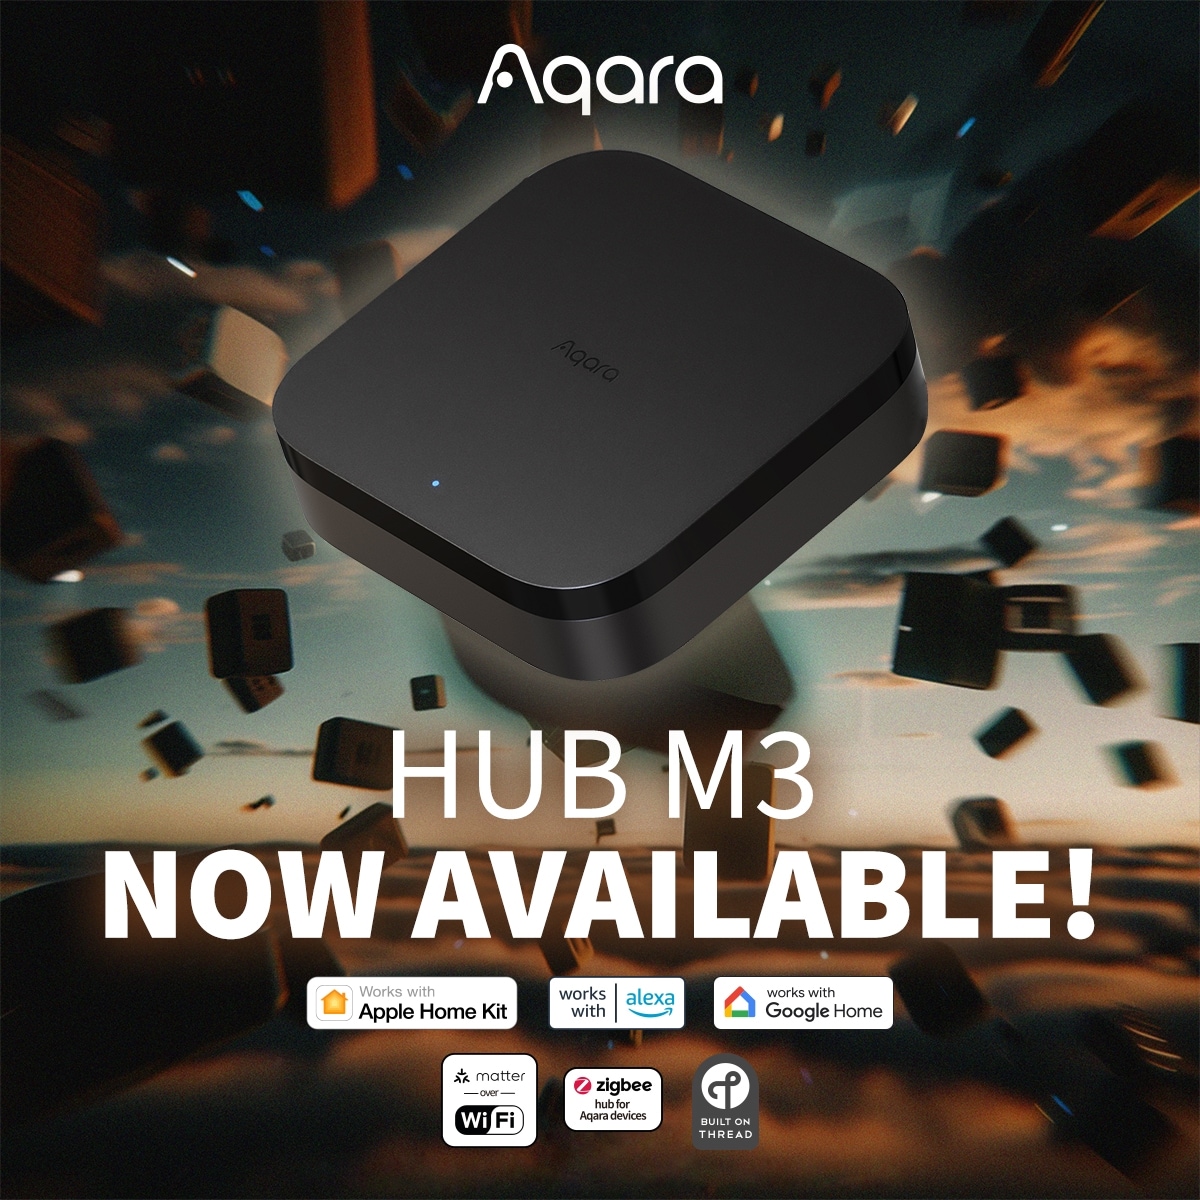 Aqara Hub M3 Now Available!